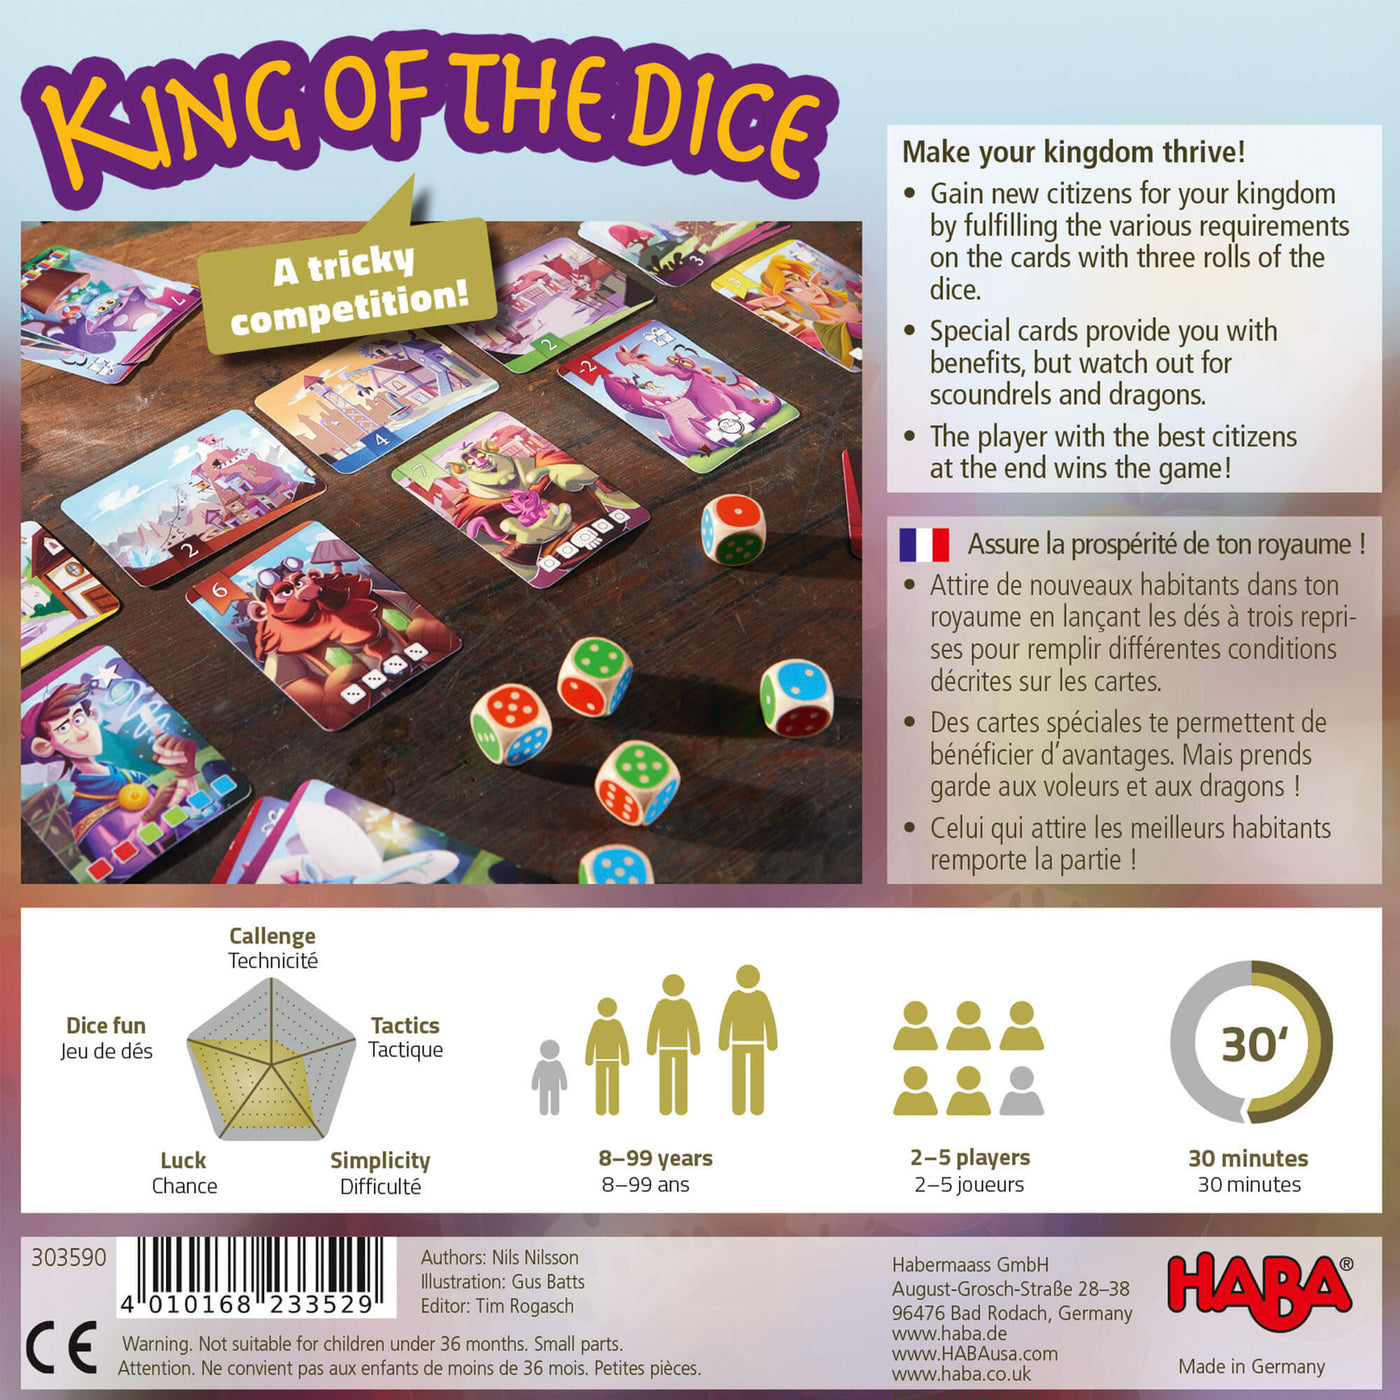 King of the Dice - HABA USA